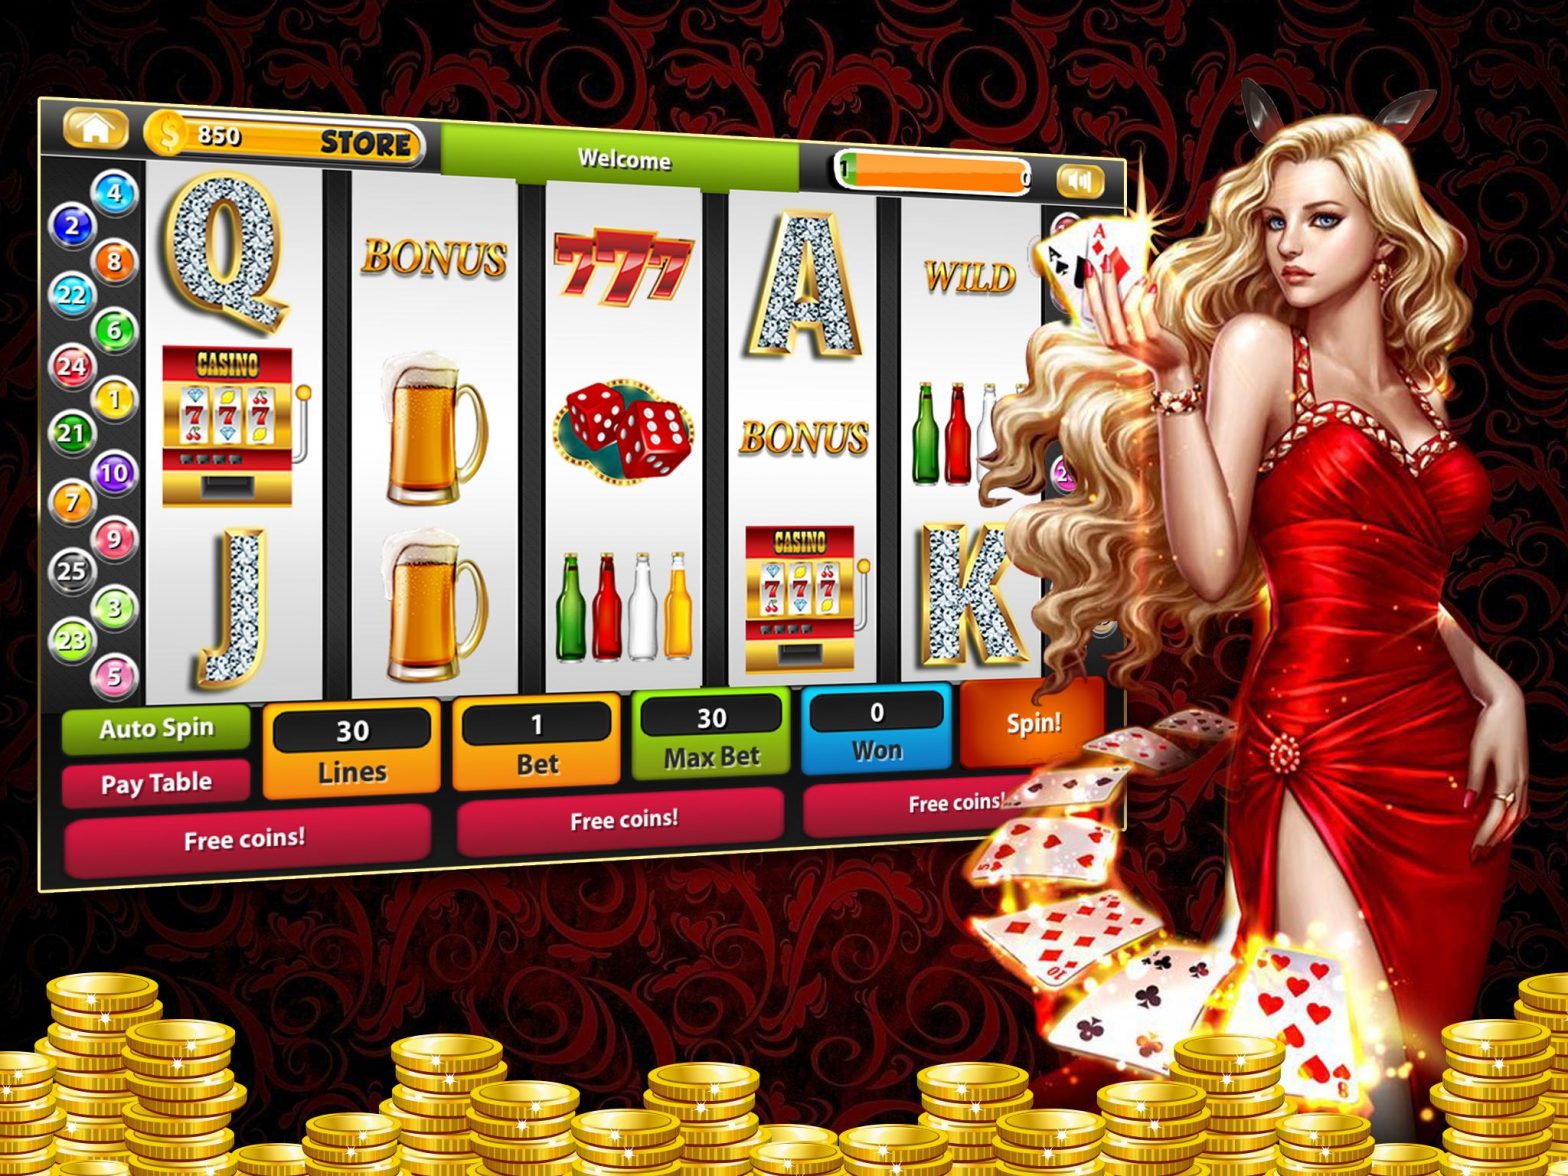 Slot Machine Themes That Women Love